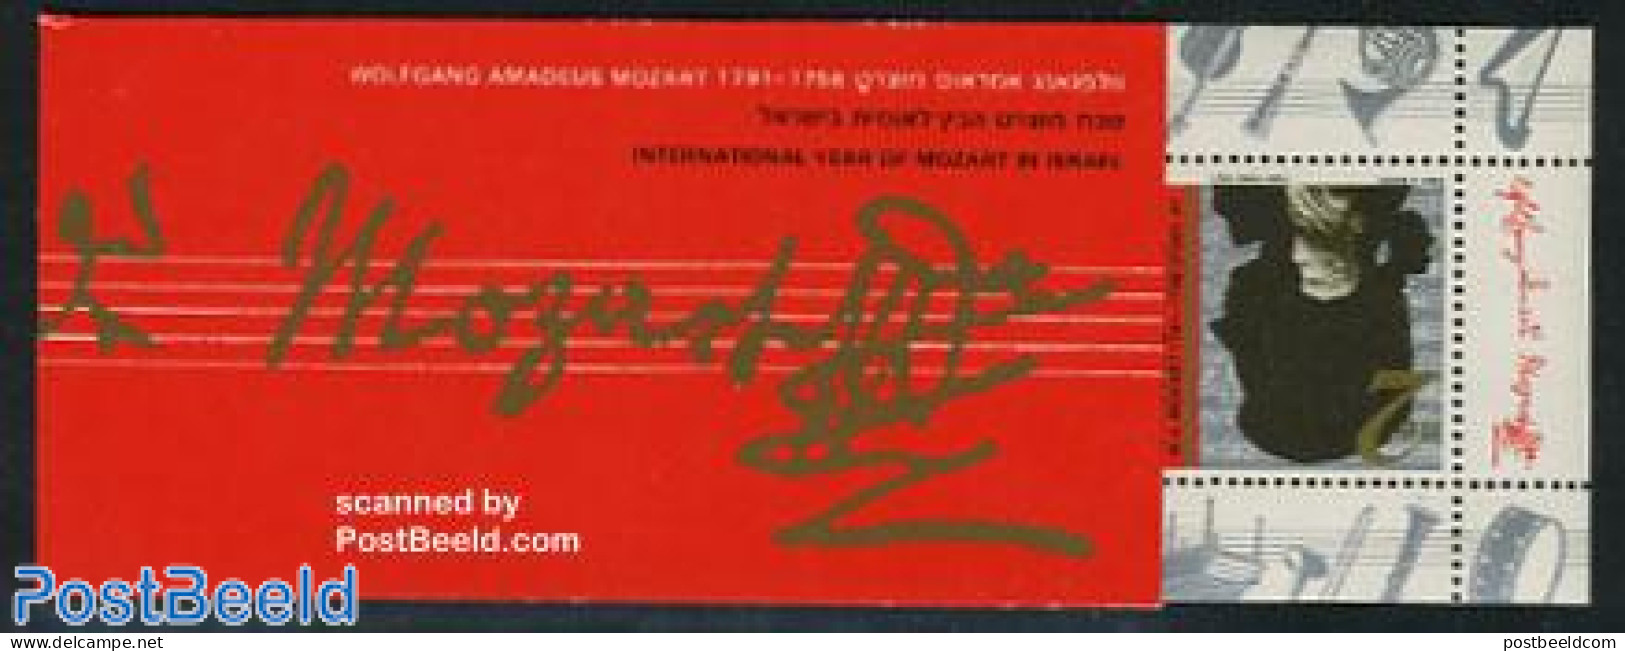 Israel 1991 Mozart Year Booklet, Mint NH, Performance Art - Amadeus Mozart - Music - Stamp Booklets - Neufs (avec Tabs)